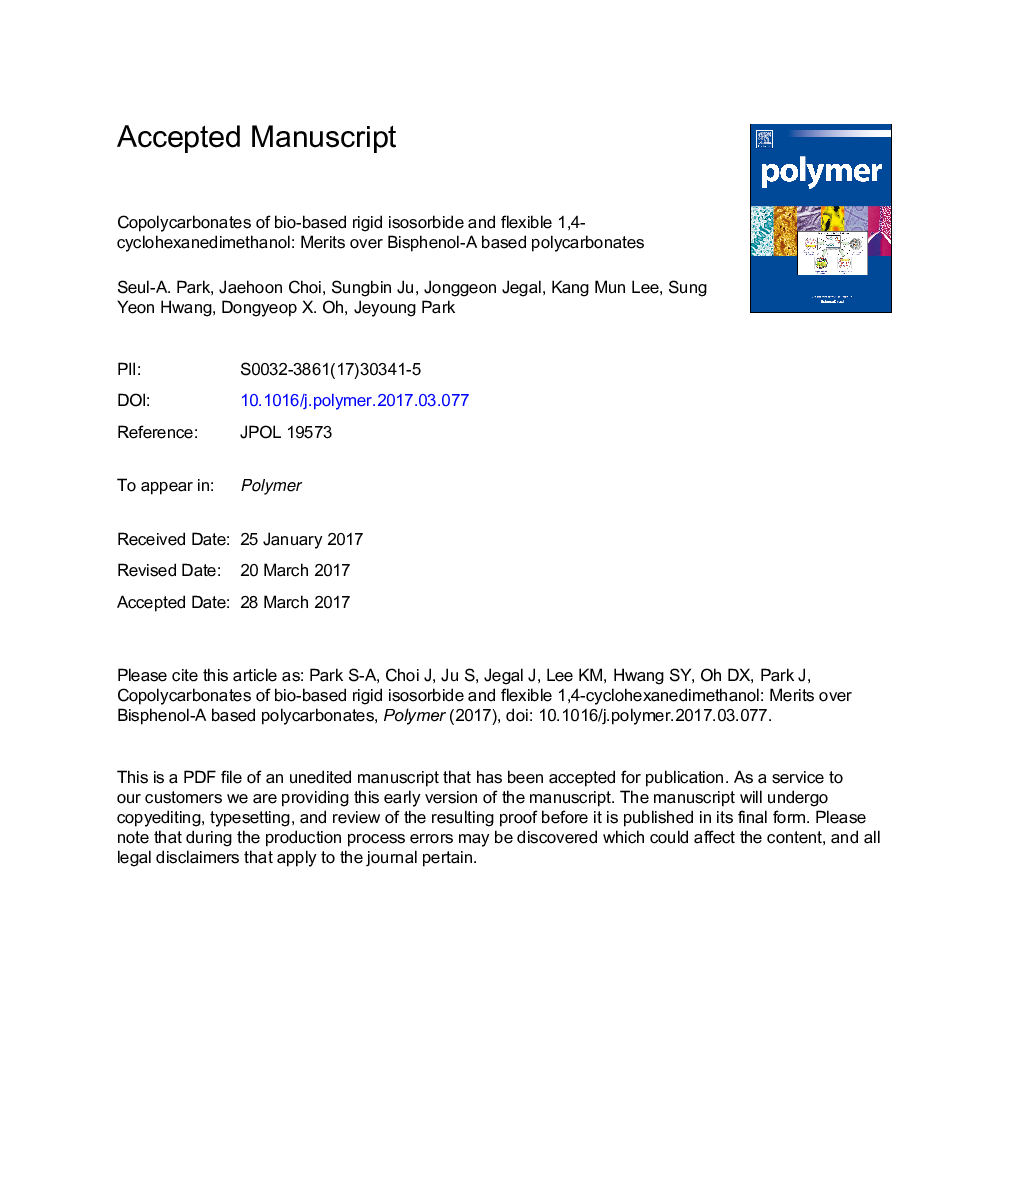 Copolycarbonates of bio-based rigid isosorbide and flexible 1,4-cyclohexanedimethanol: Merits over bisphenol-A based polycarbonates